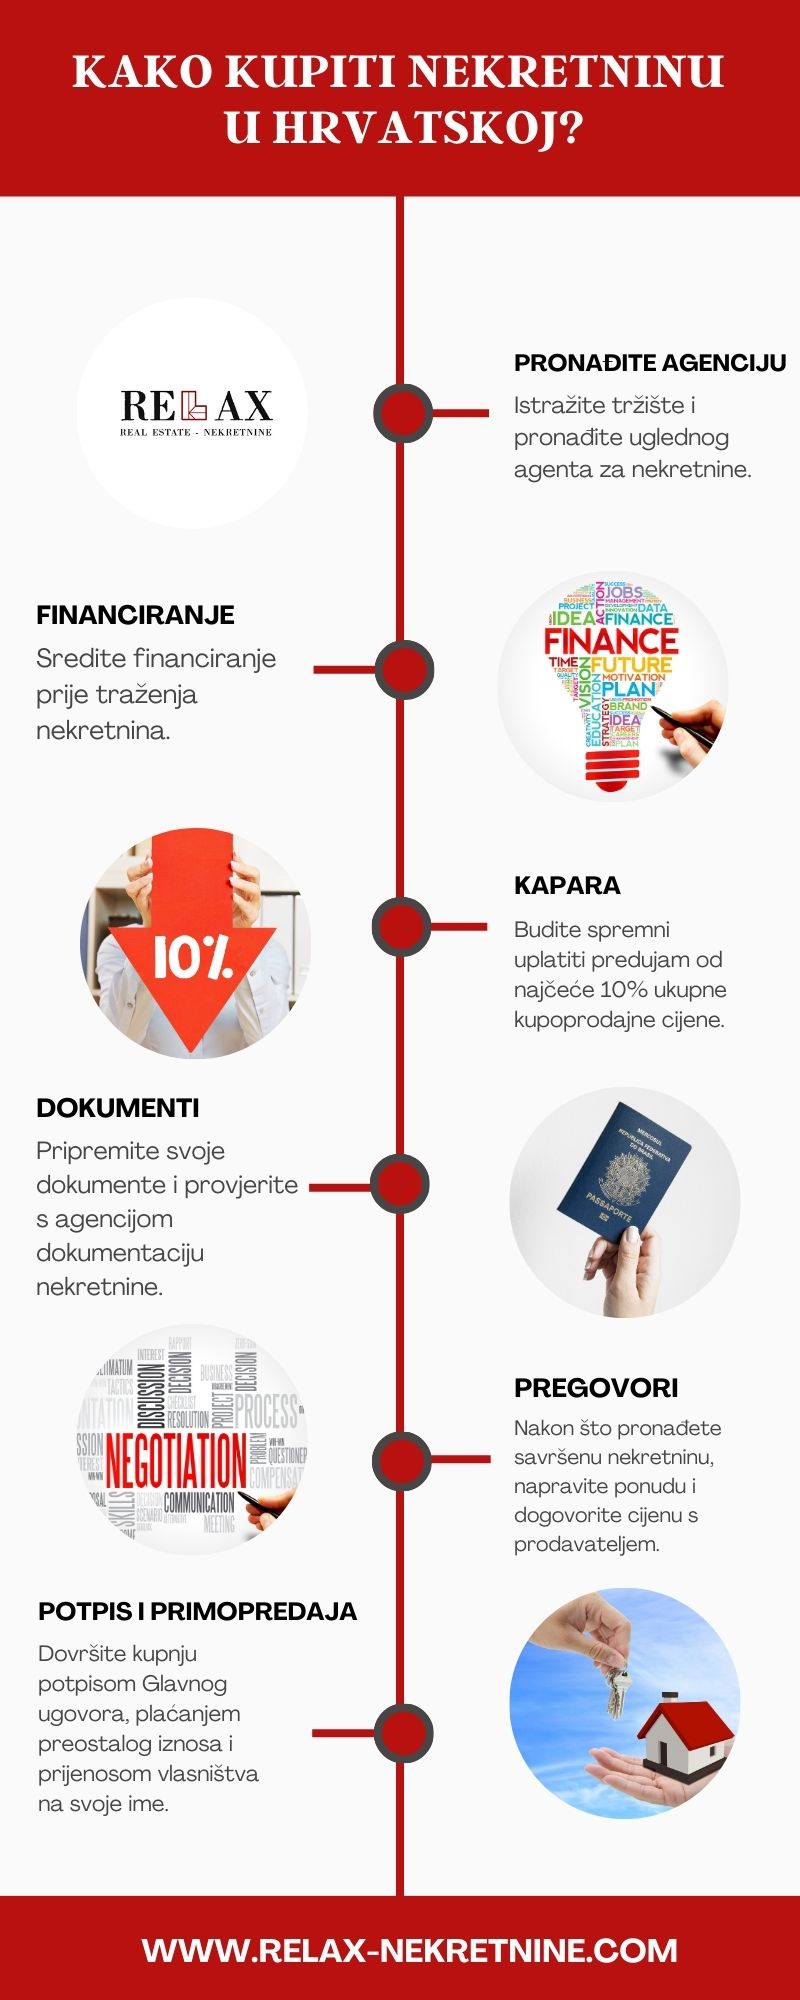 How to buy real estate in Croatia